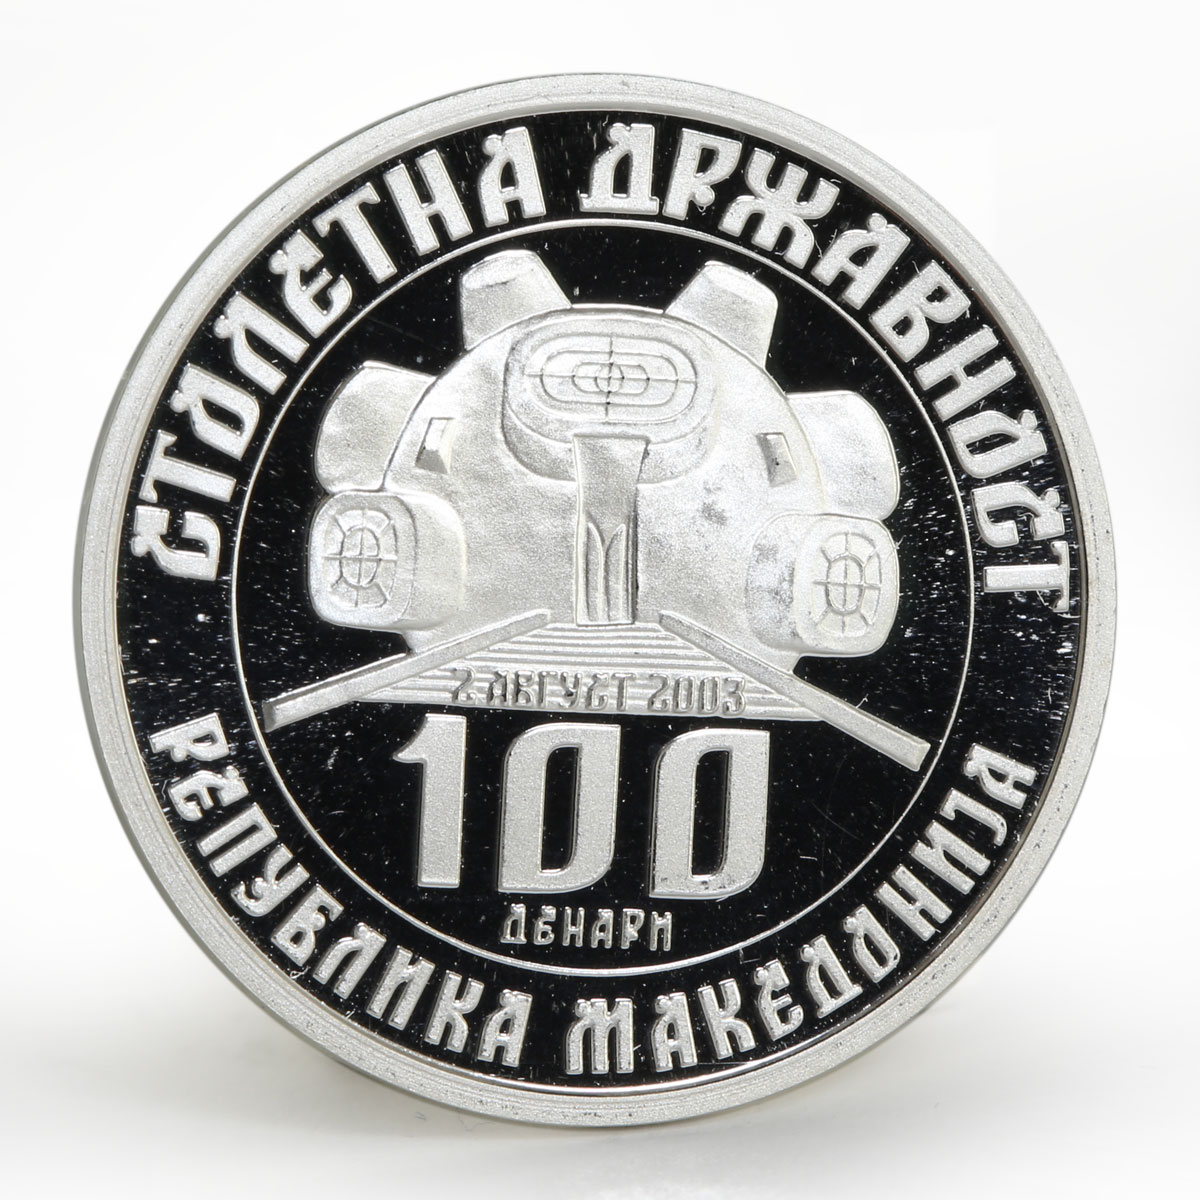 Macedonia 100 denari Nikola Karev revolutionary proof silver coin 2003